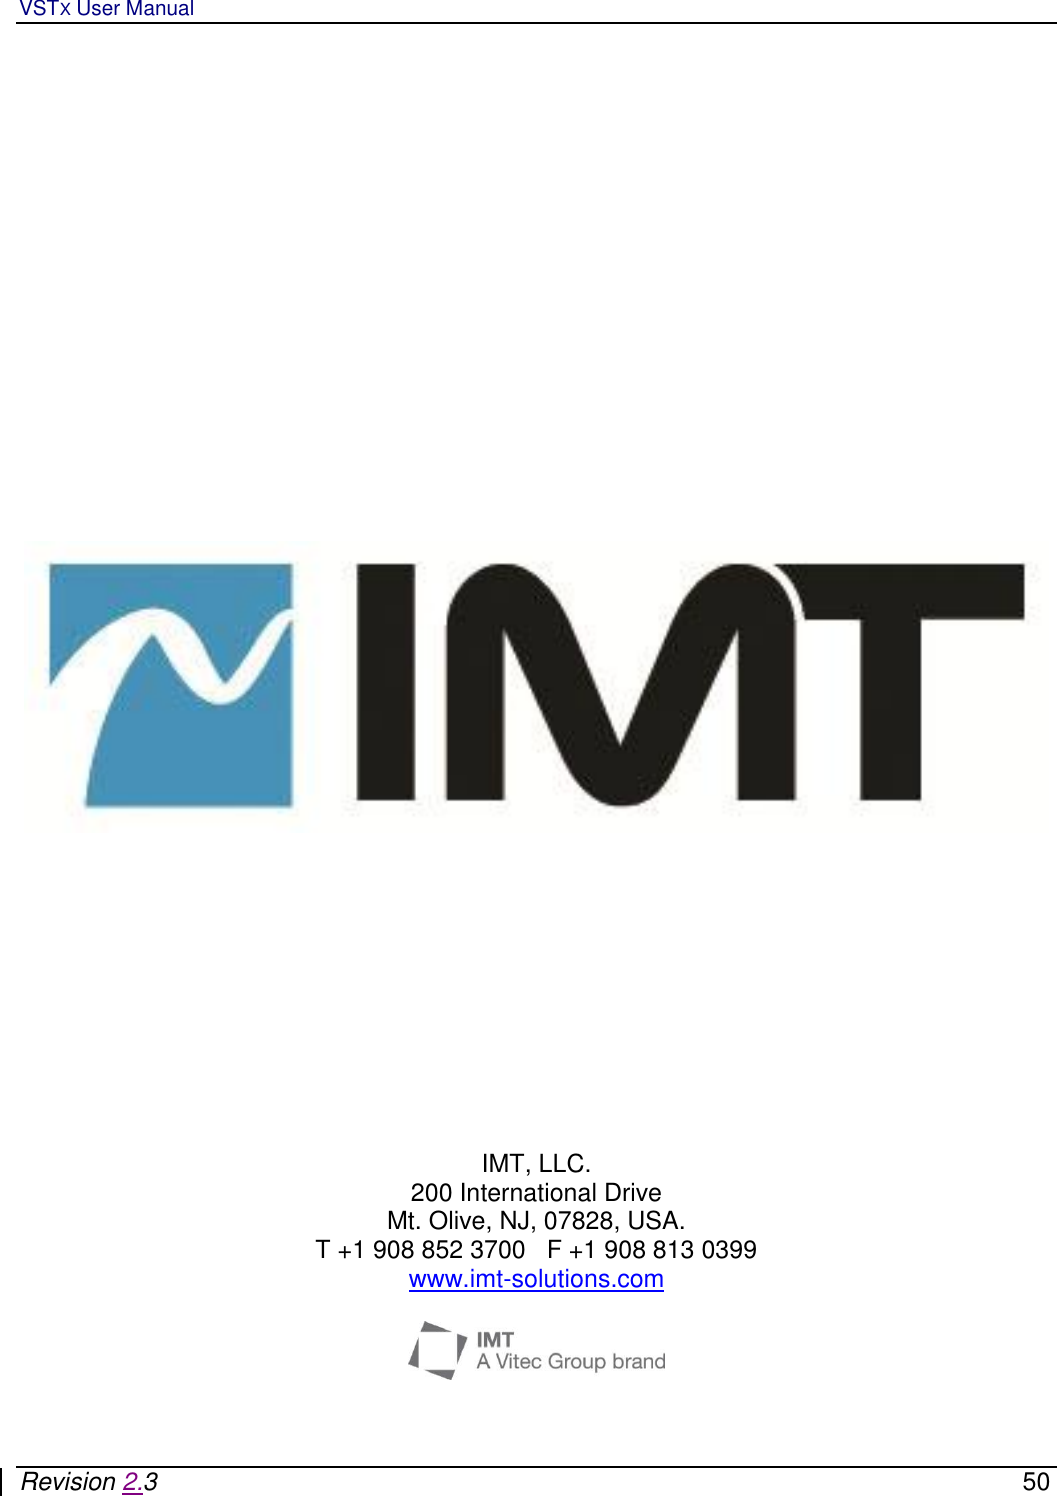 VSTX User Manual   Revision 2.3    50                              IMT, LLC. 200 International Drive Mt. Olive, NJ, 07828, USA. T +1 908 852 3700   F +1 908 813 0399    www.imt-solutions.com    